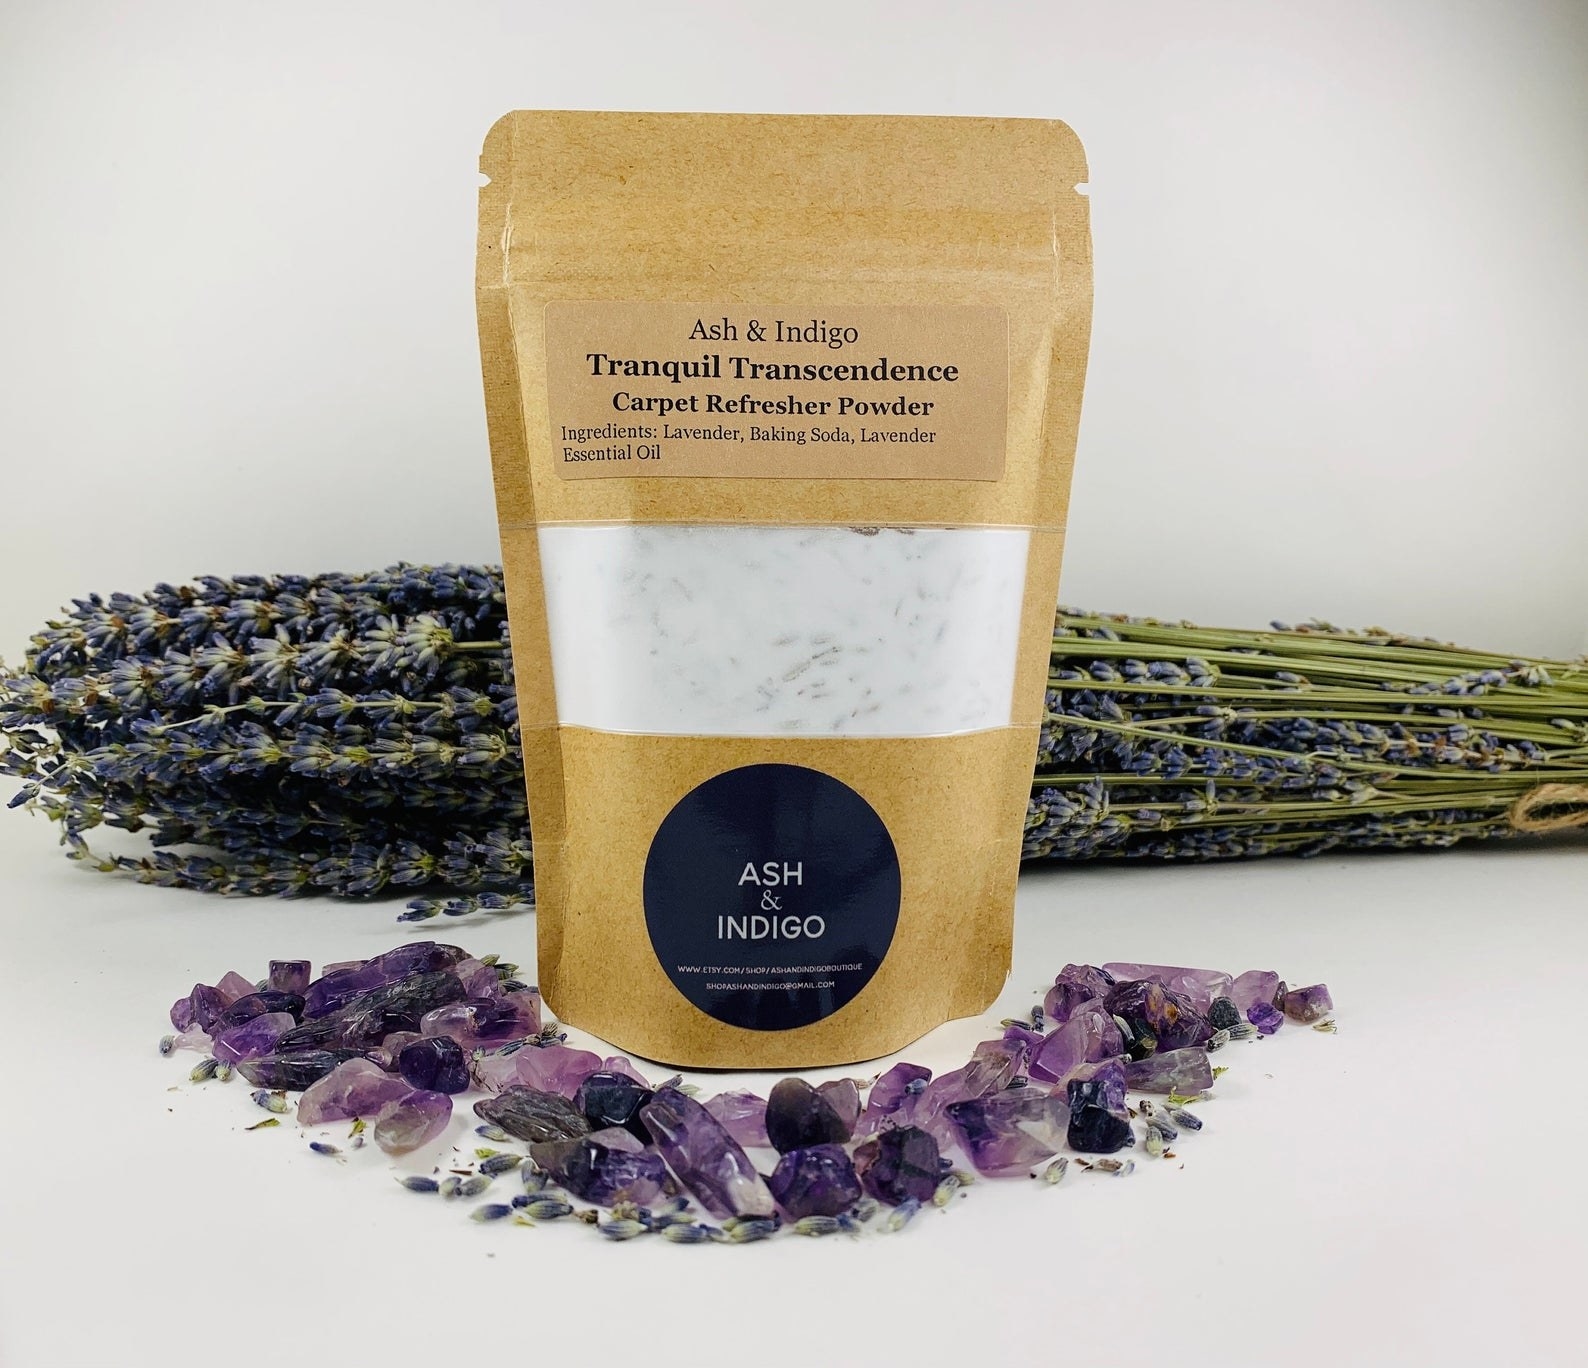 Bag of Ash and Indigo carpet freshener powder in front of a bundle of lavender